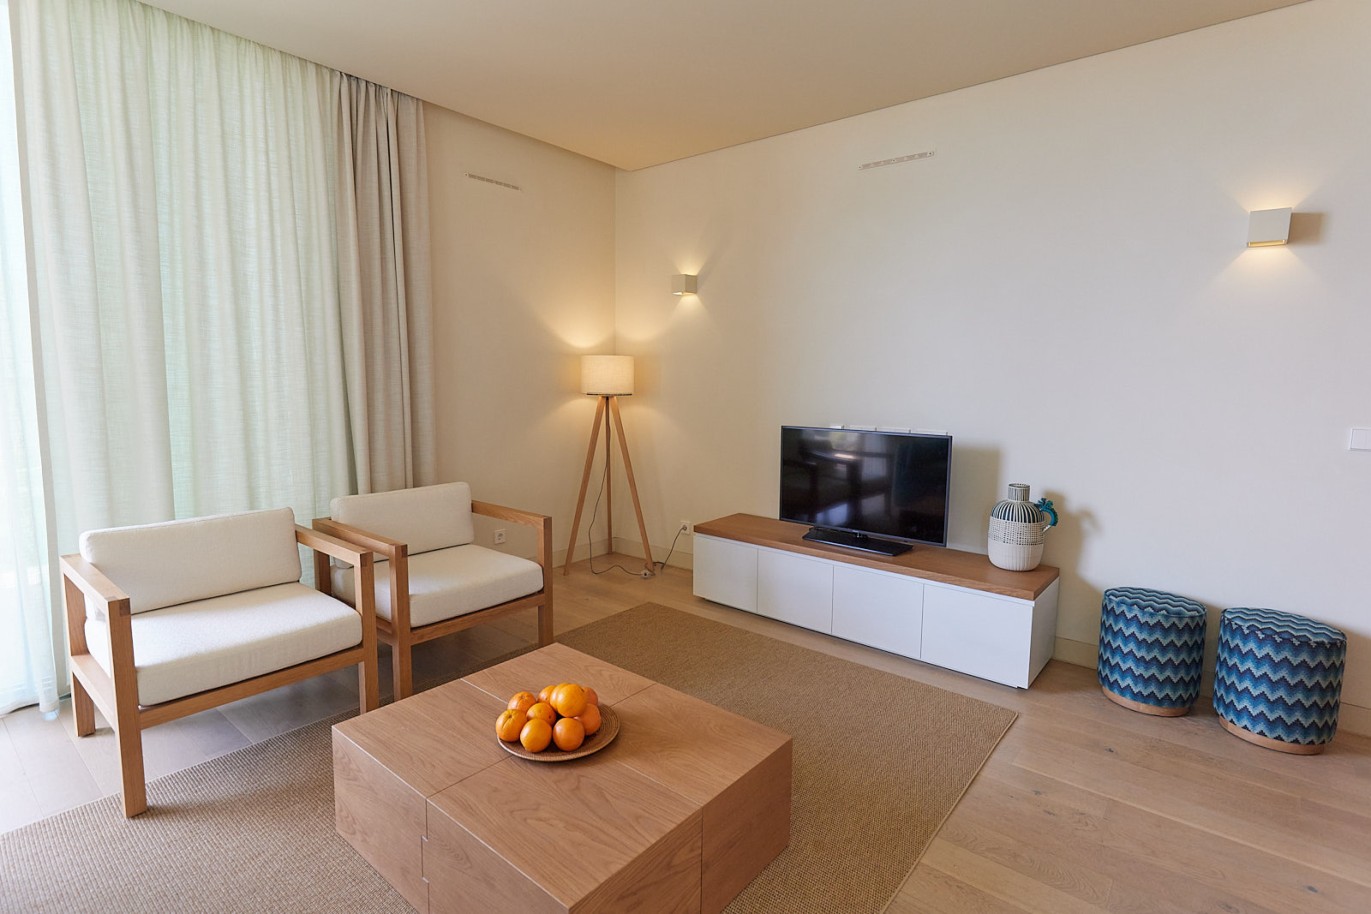 2 bedroom apartment in resort, for sale in Porches, Algarve_229118